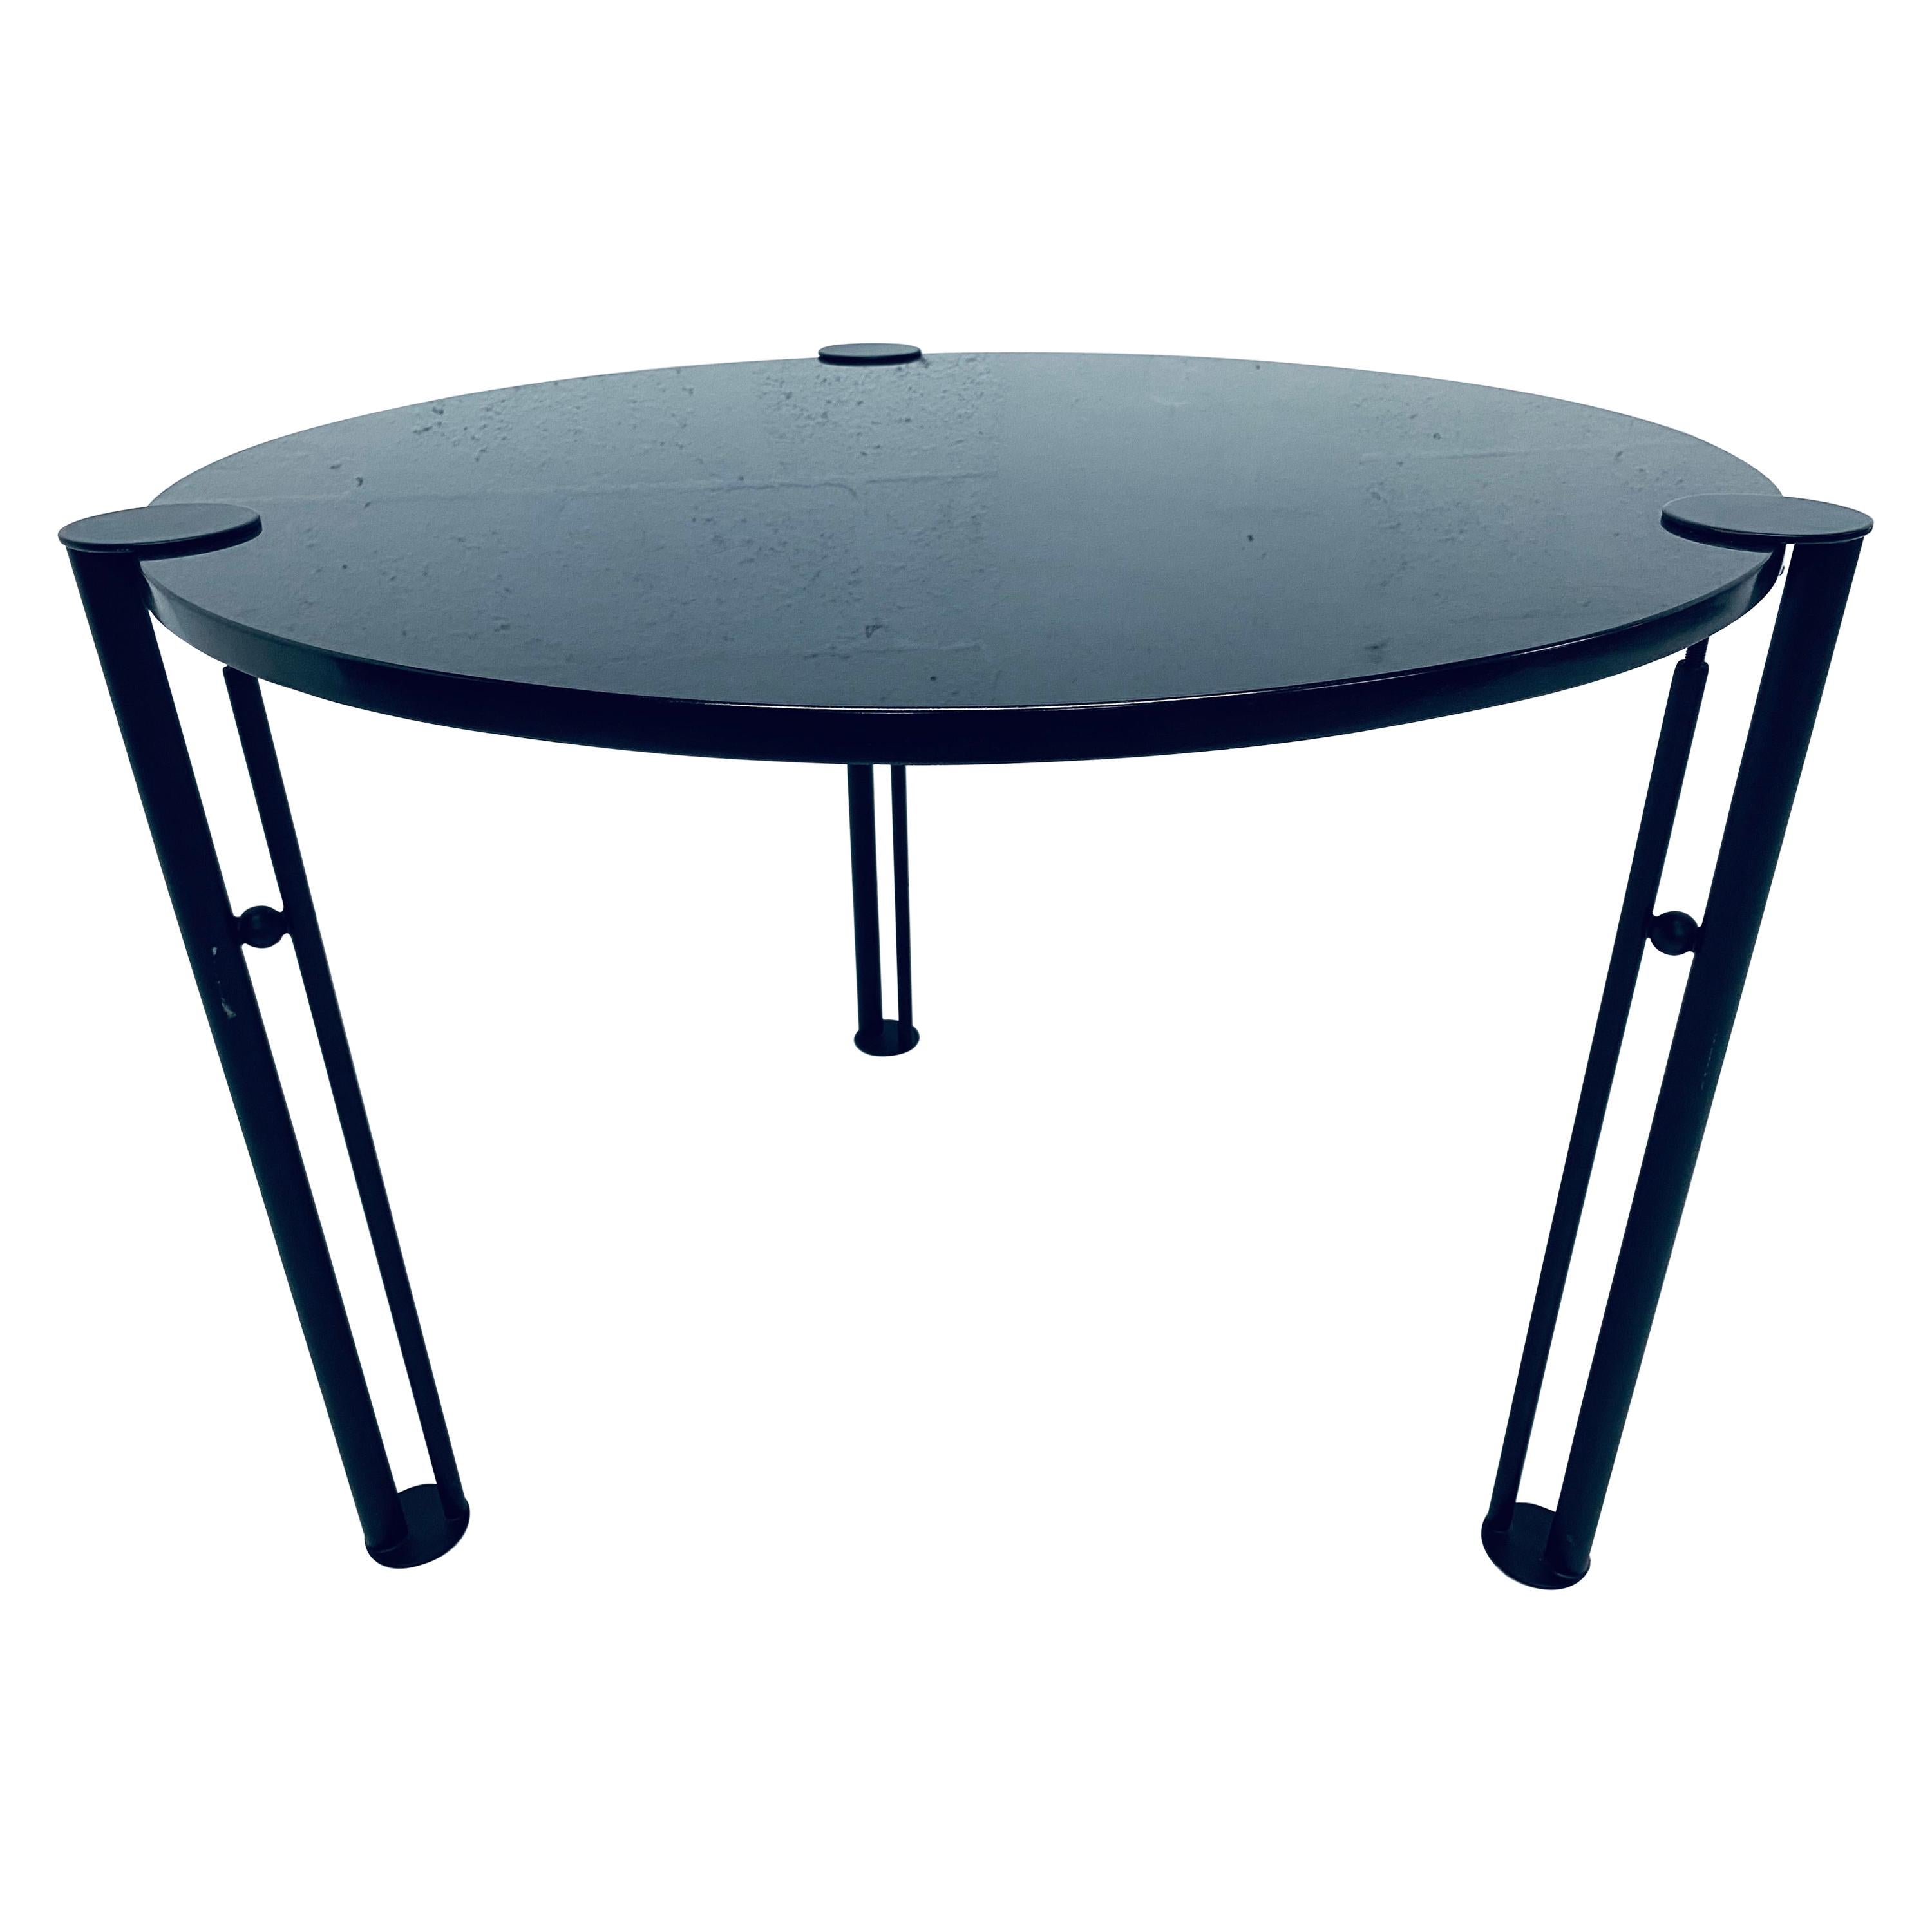 Philippe Starck "Joe Ship" Postmodern Steel and Granite Dining or Center Table